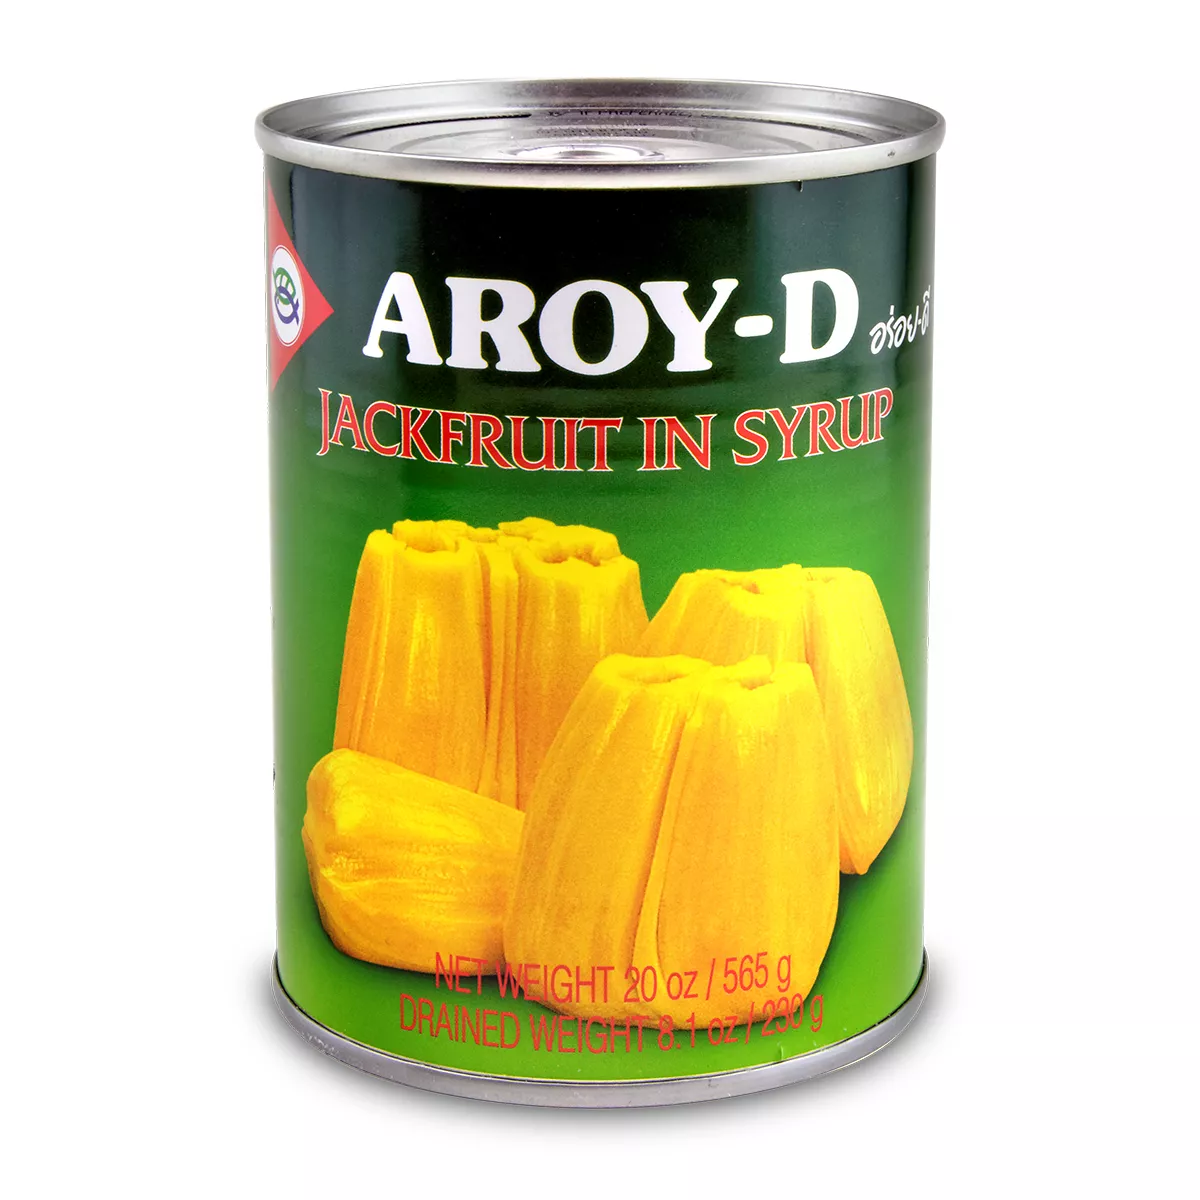 Jackfruit in sirop AROY-D 565g, [],asianfood.ro